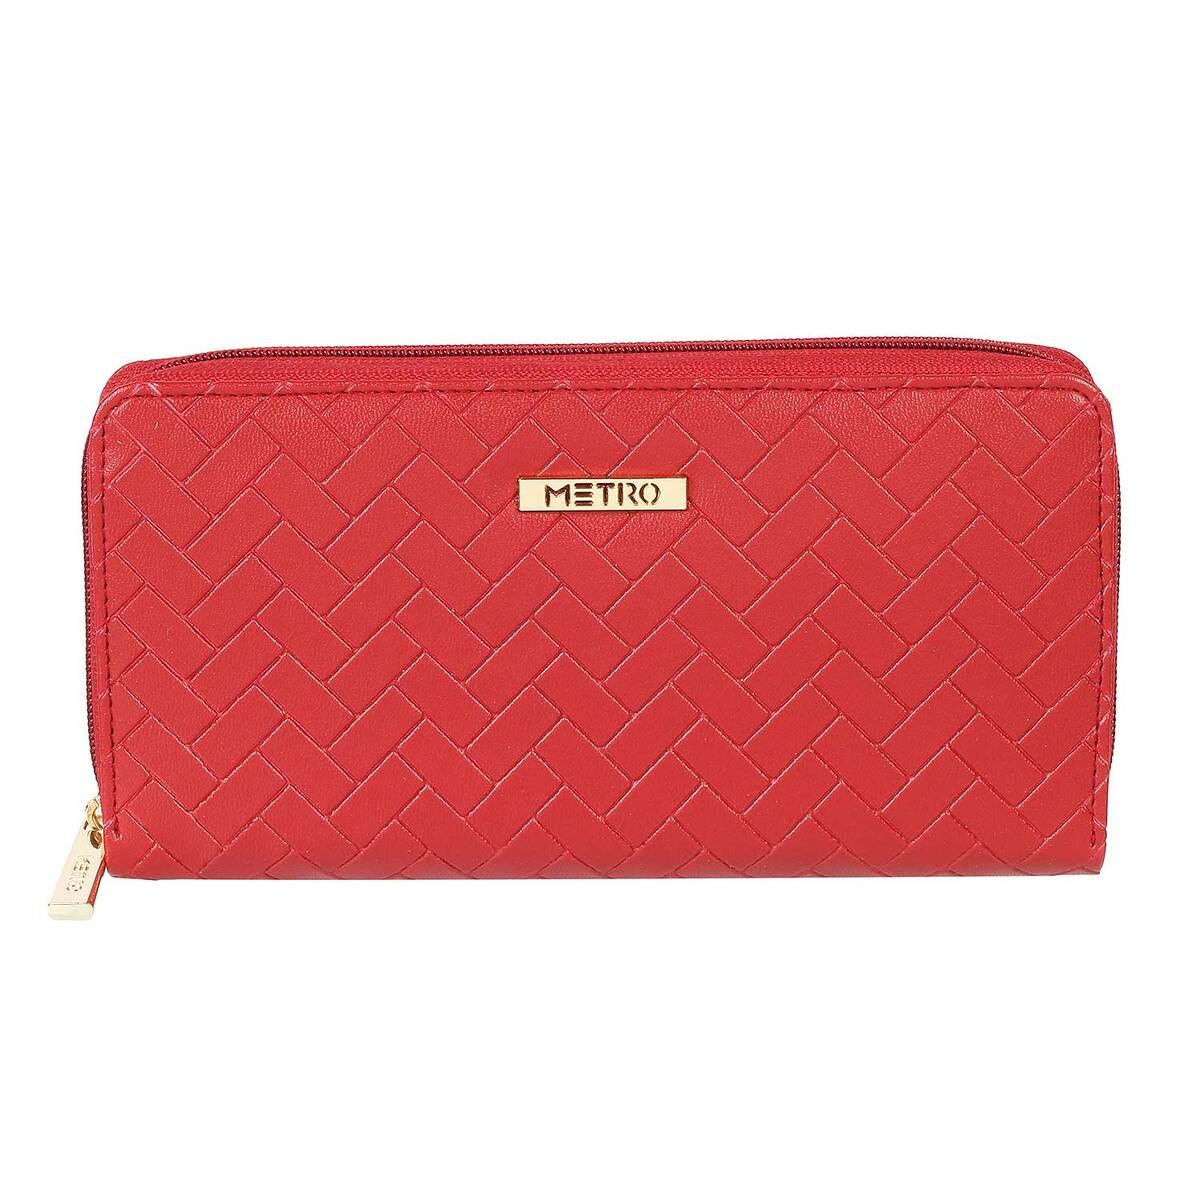 Buy RED Genuine Leather Bag. Cross Body / Shoulder Bag. Adjustable Strap,  Zipper Flap. LARGER STYLE. Red Leather Messenger. Red Leather Purse Online  in India - Etsy